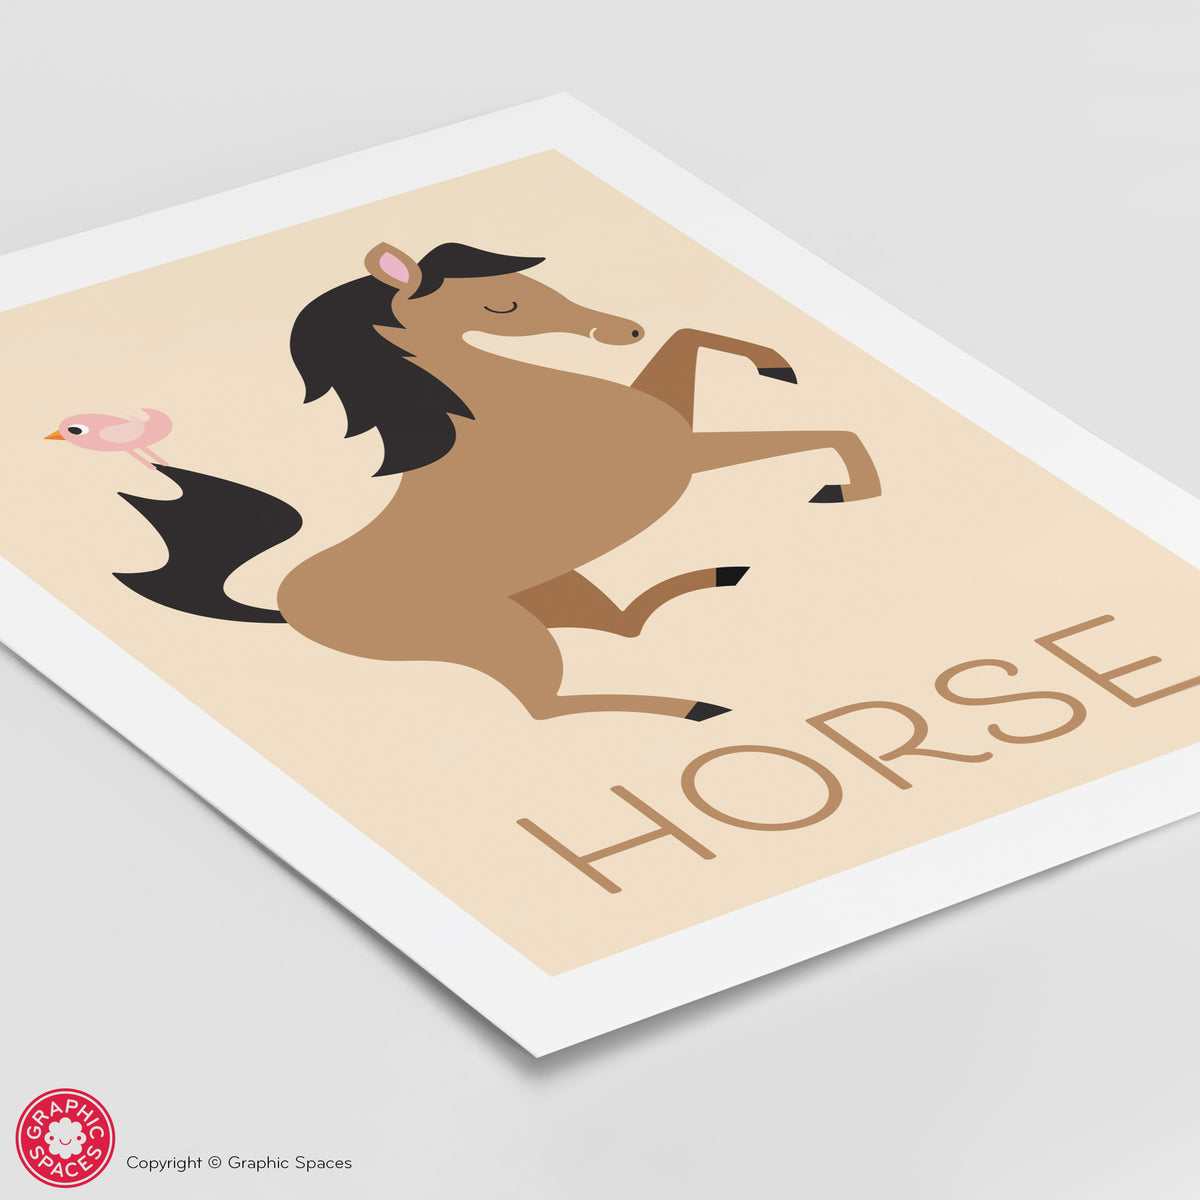 Horse nursery art print.